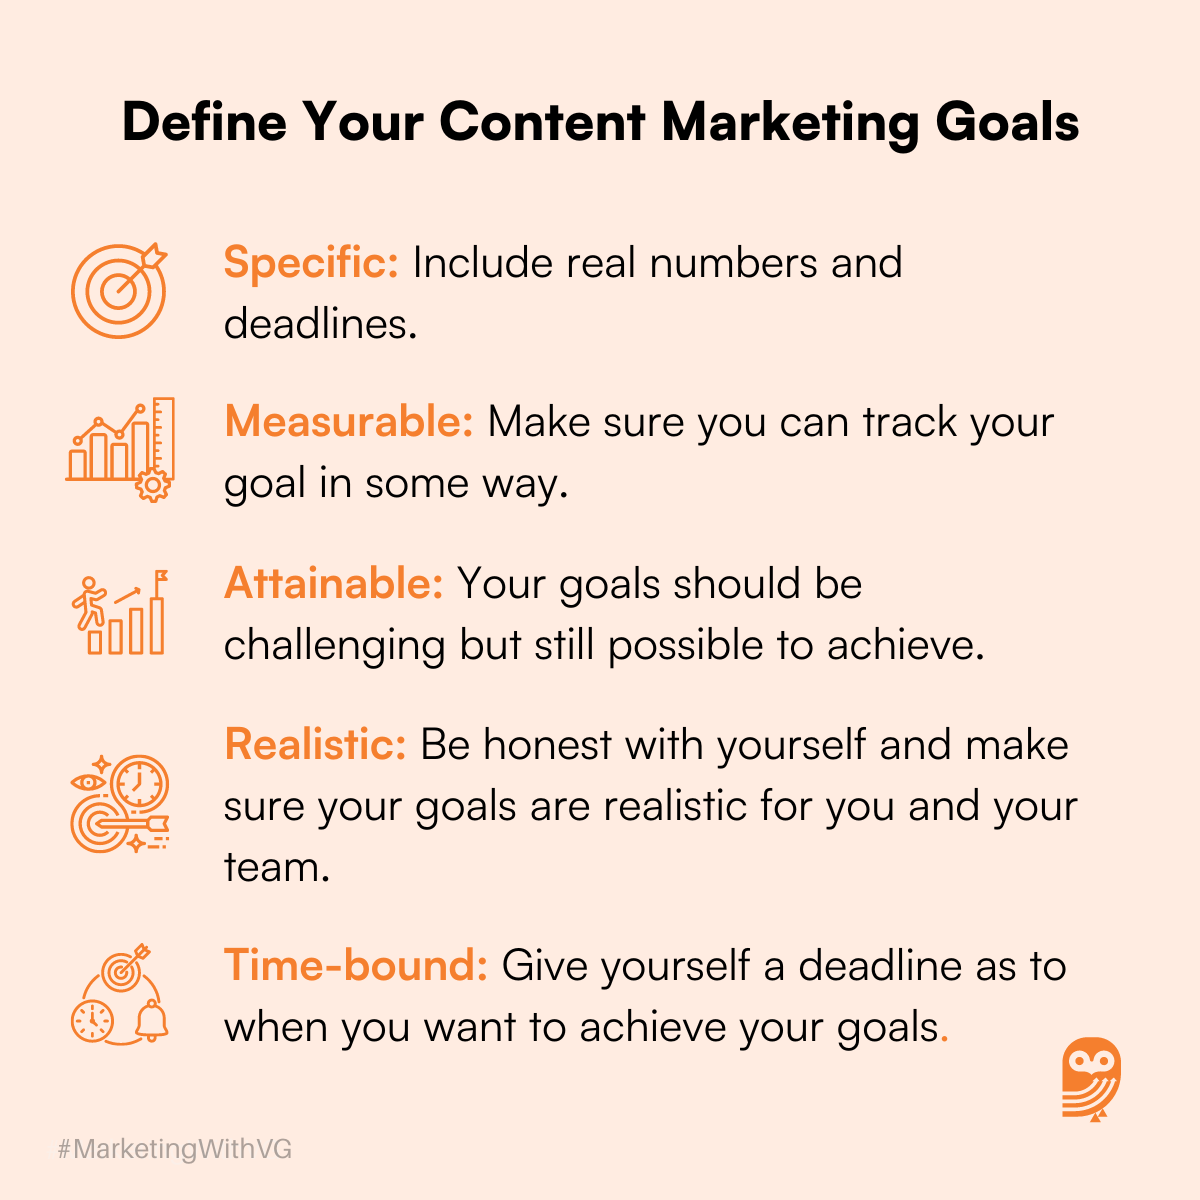 Define Your Content Marketing Goals